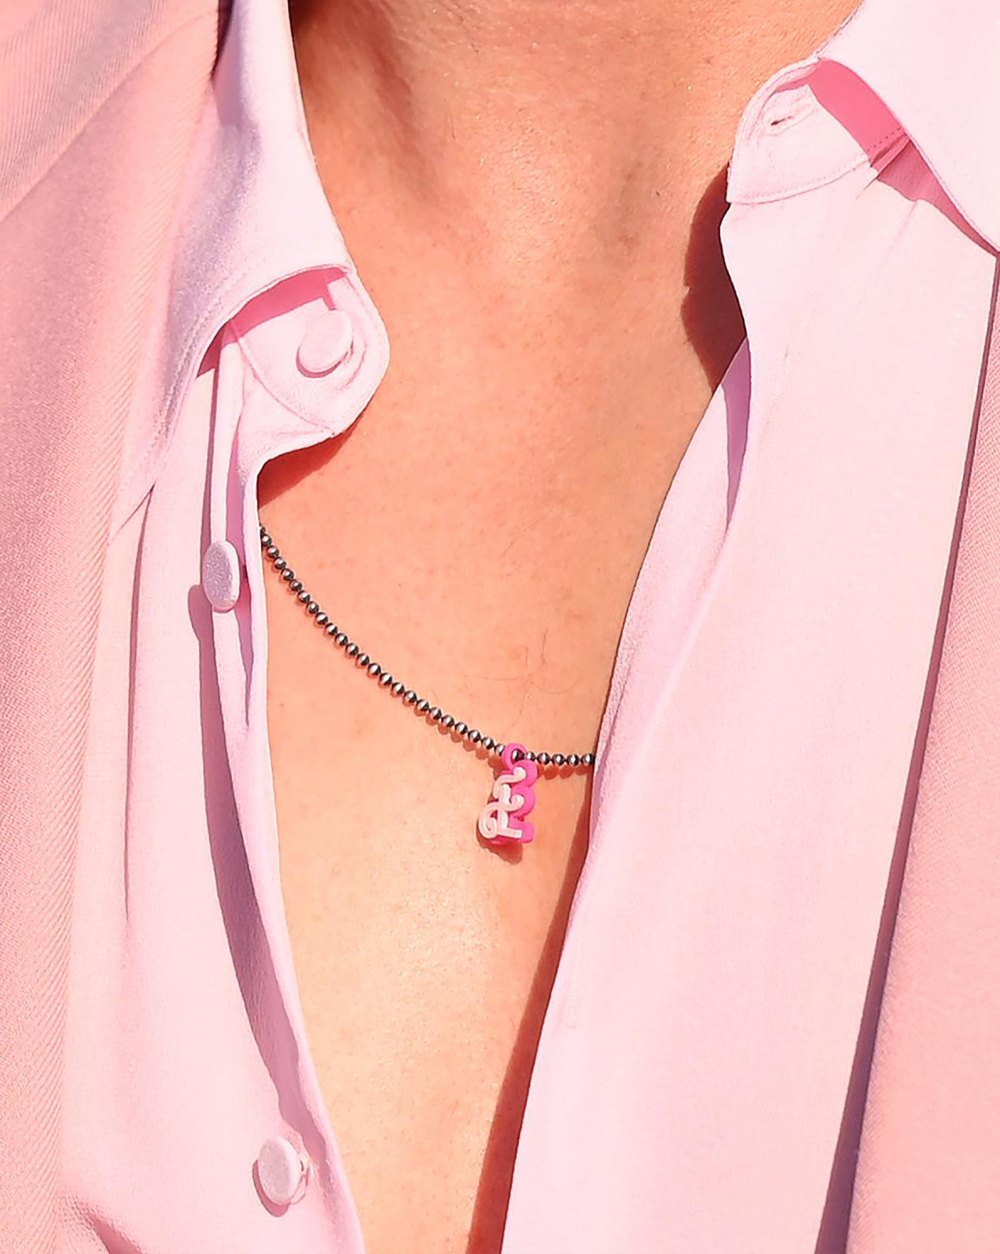 Ryan Gosling Wears E Necklace at Barbie Premiere 247